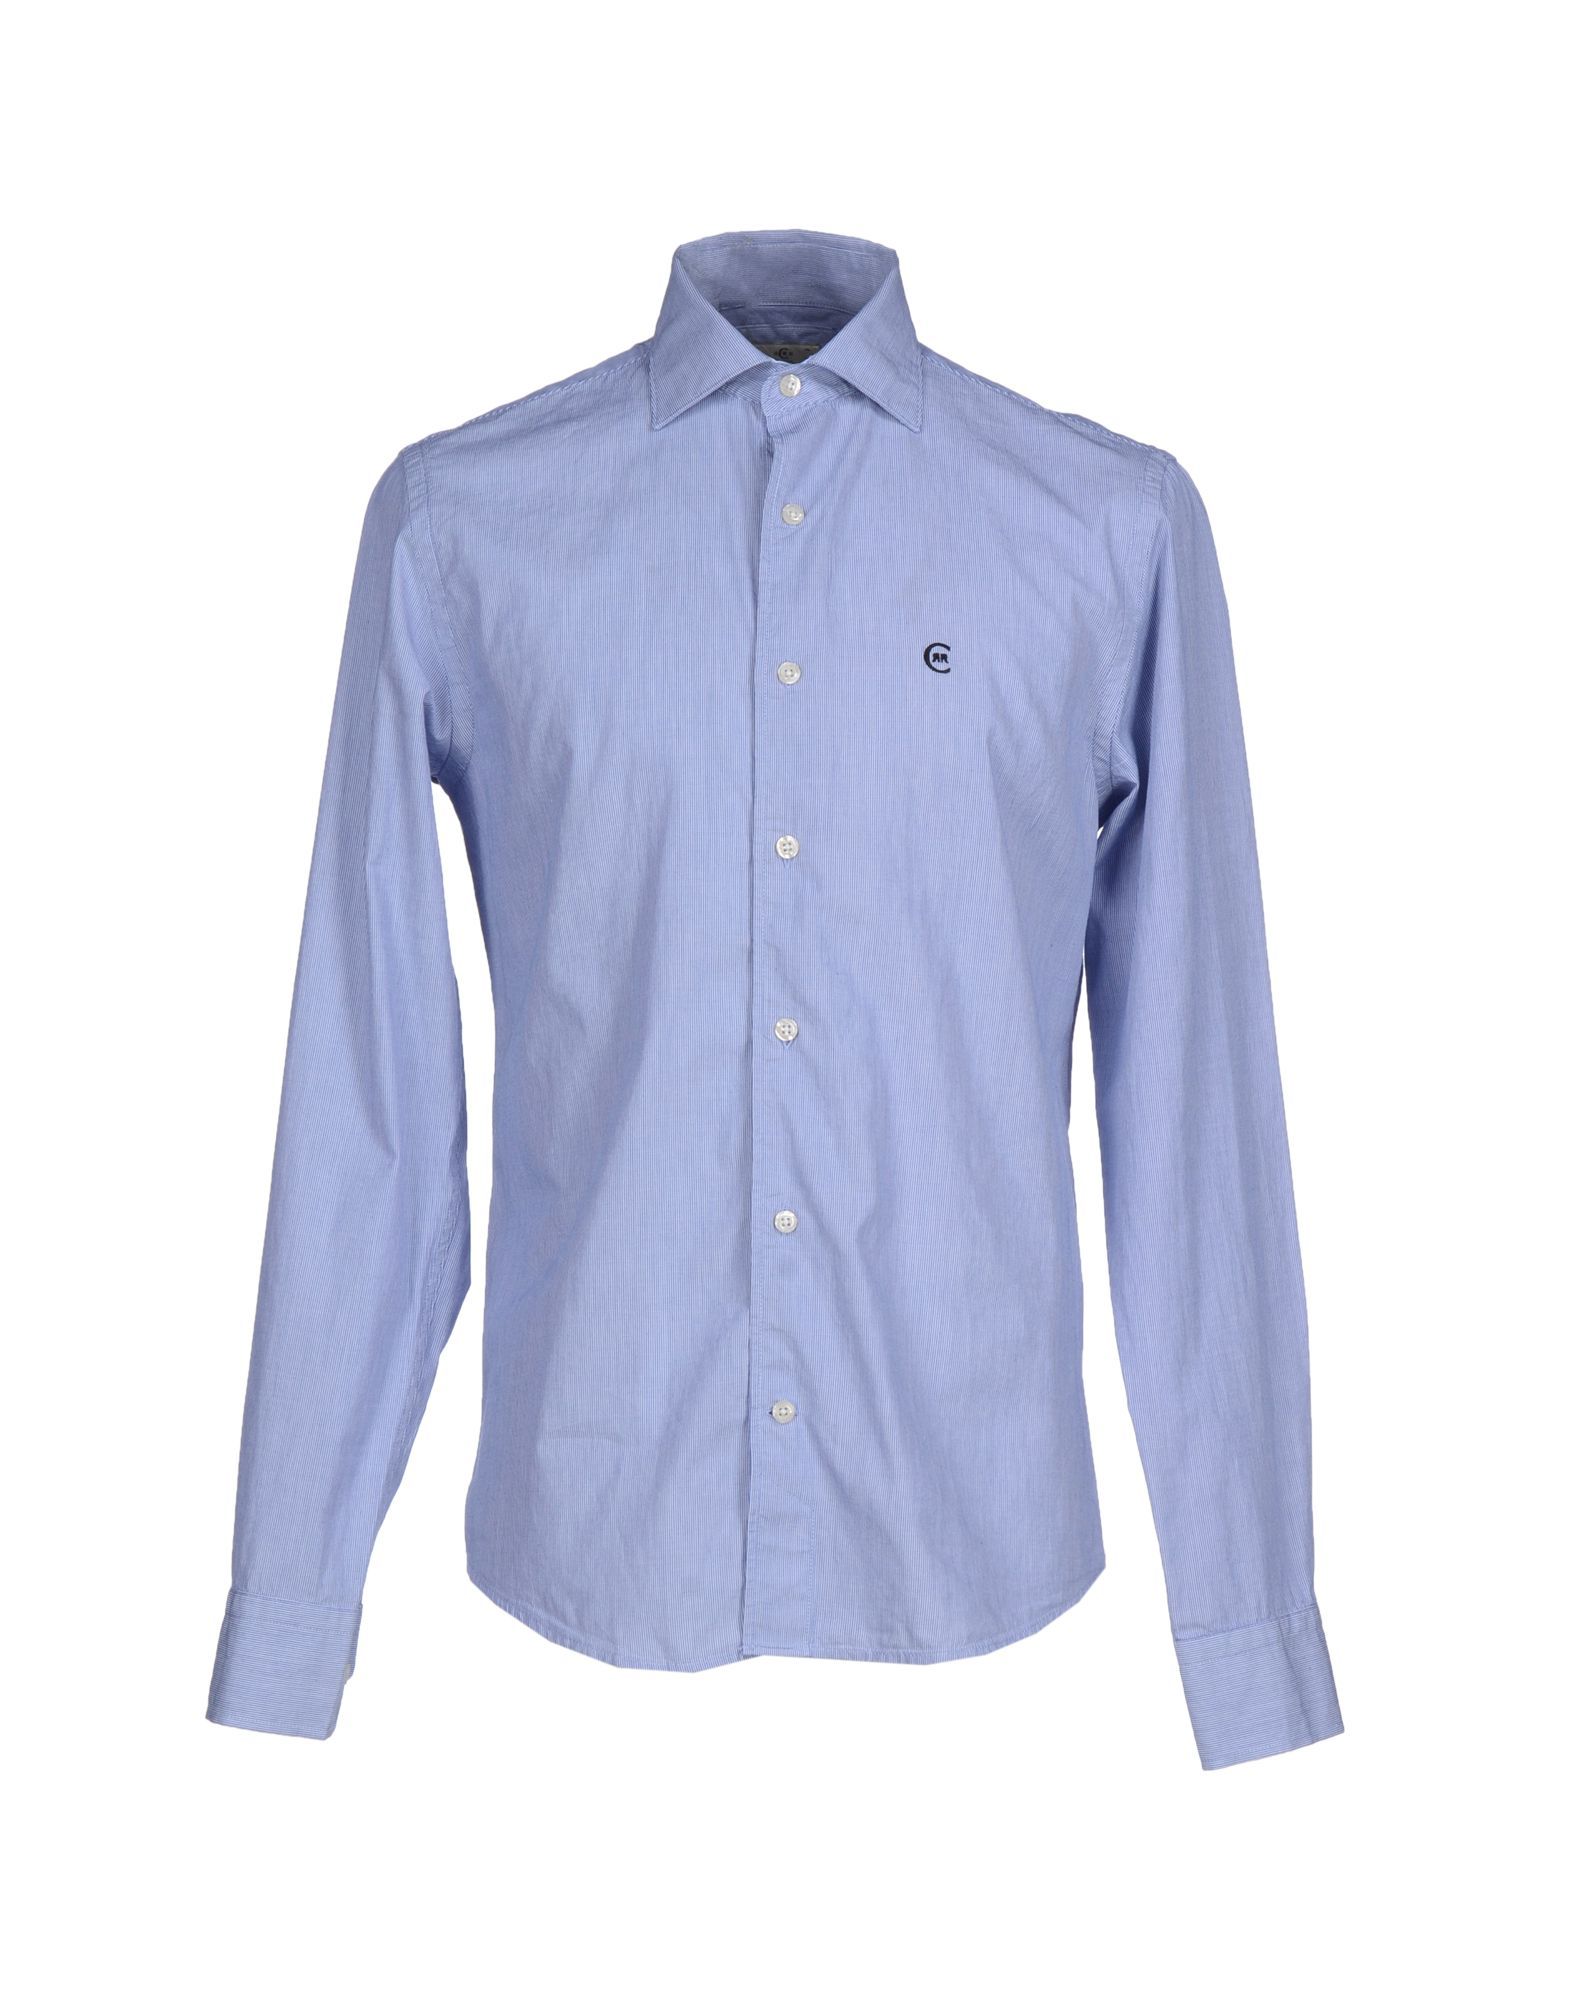 Cerruti 1881 Blue Cotton Shirt